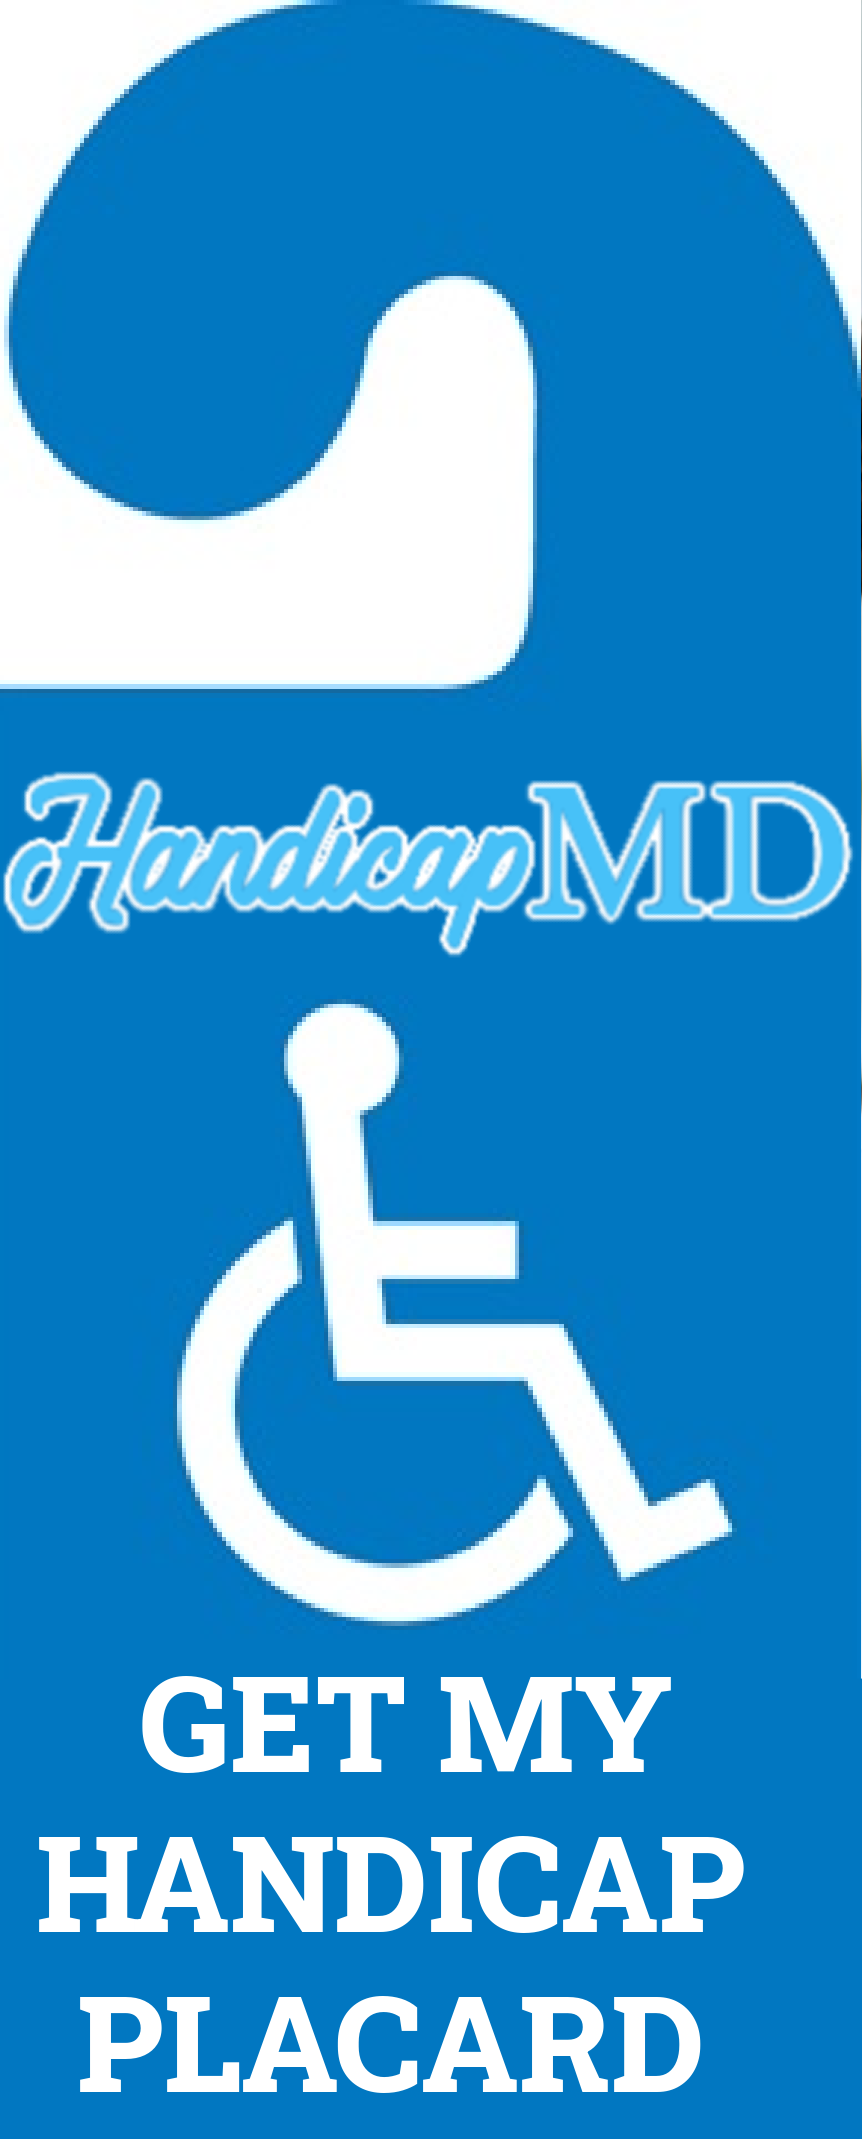 Is Handicap Parking Free In Florida?